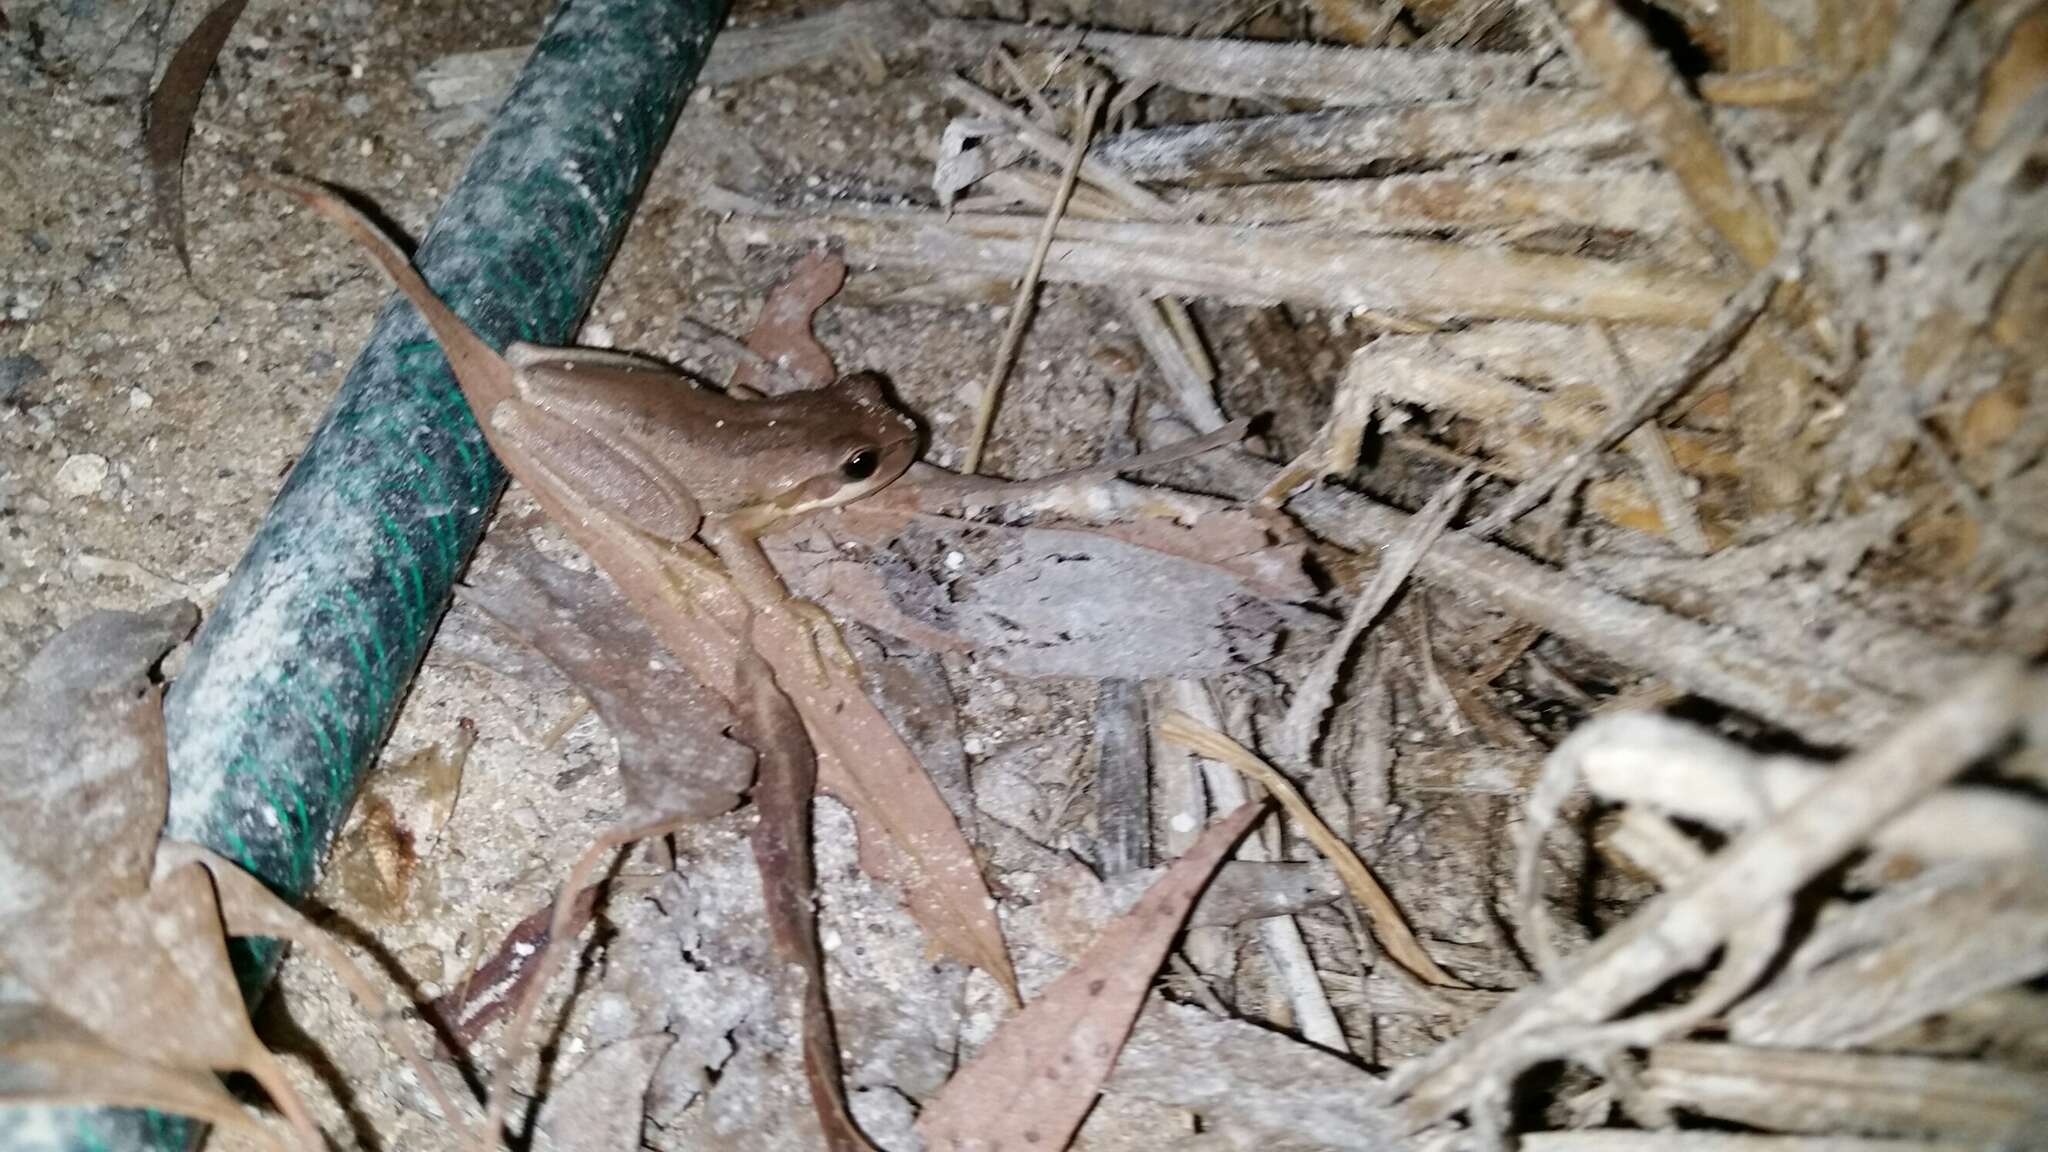 Image of Brown Tree Frog